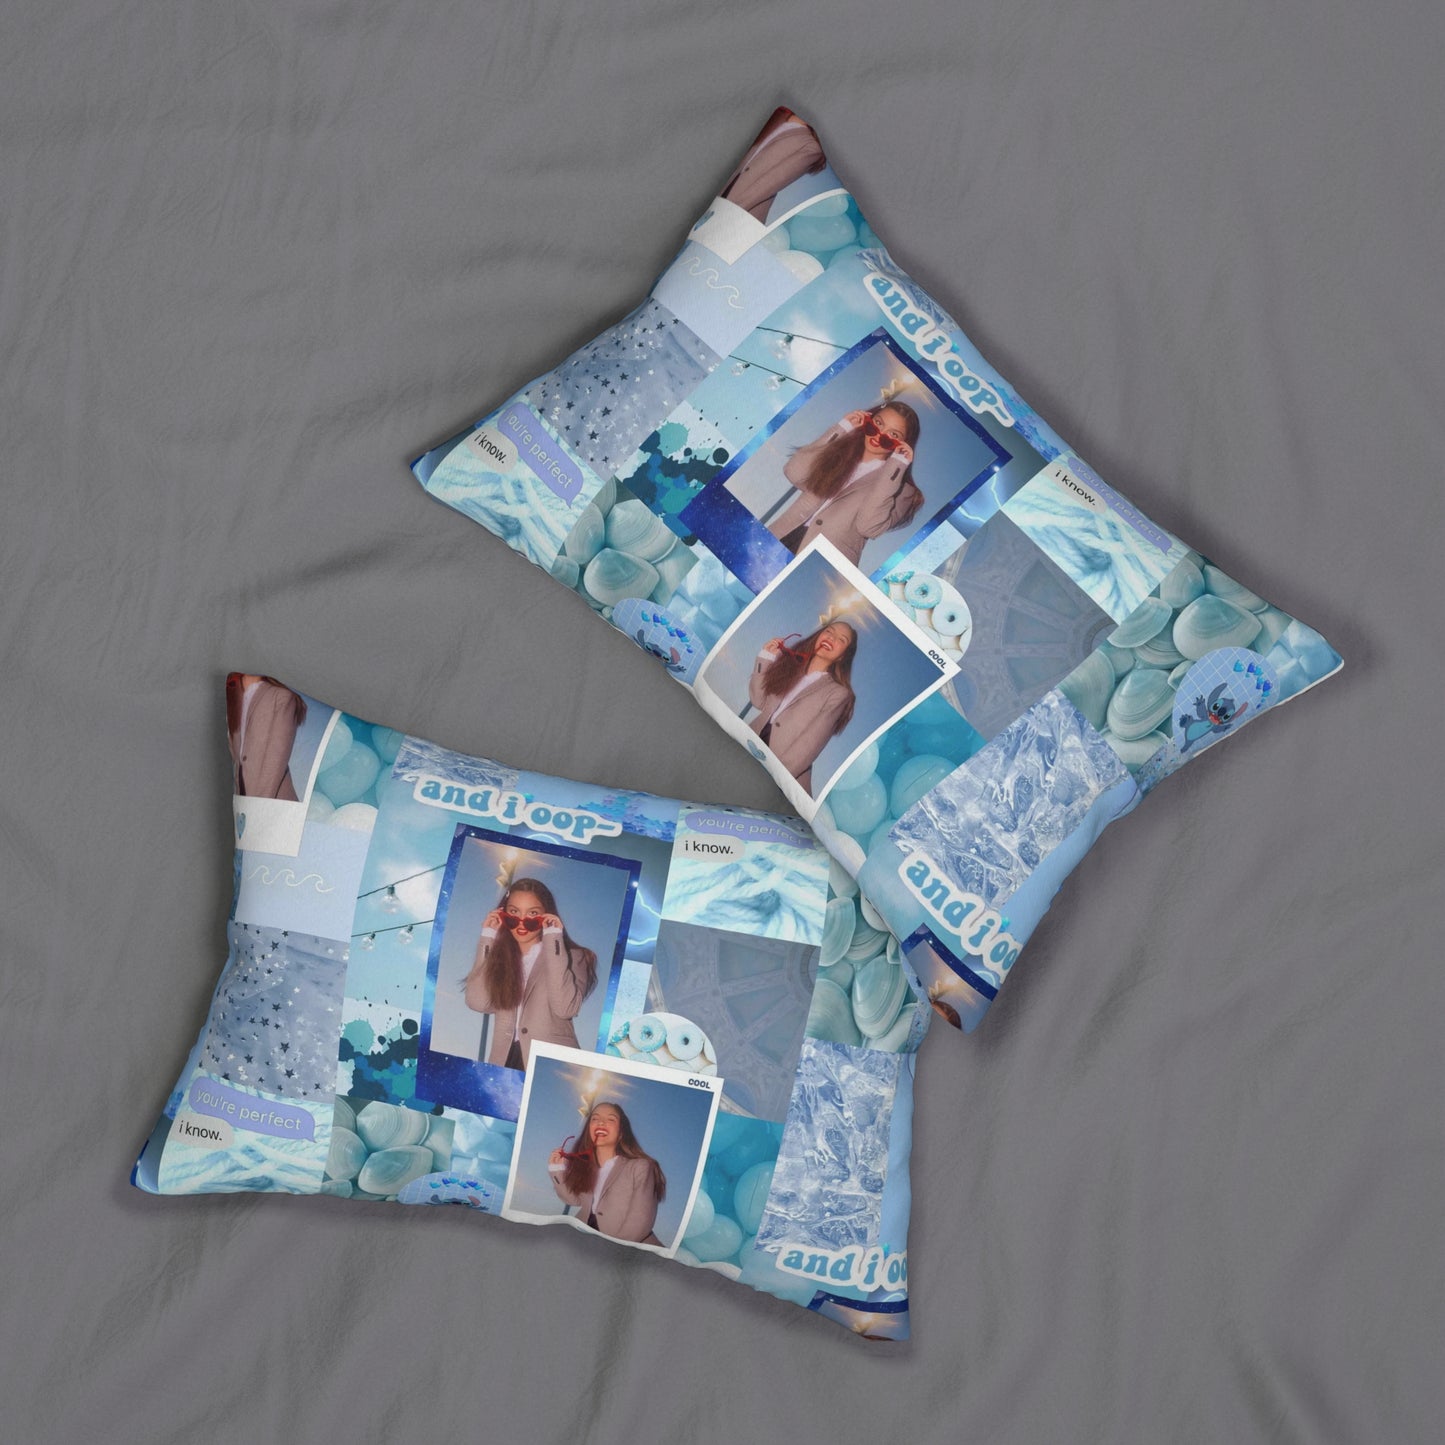 Olivia Rodrigo Light Blue Aesthetic Collage Polyester Lumbar Pillow